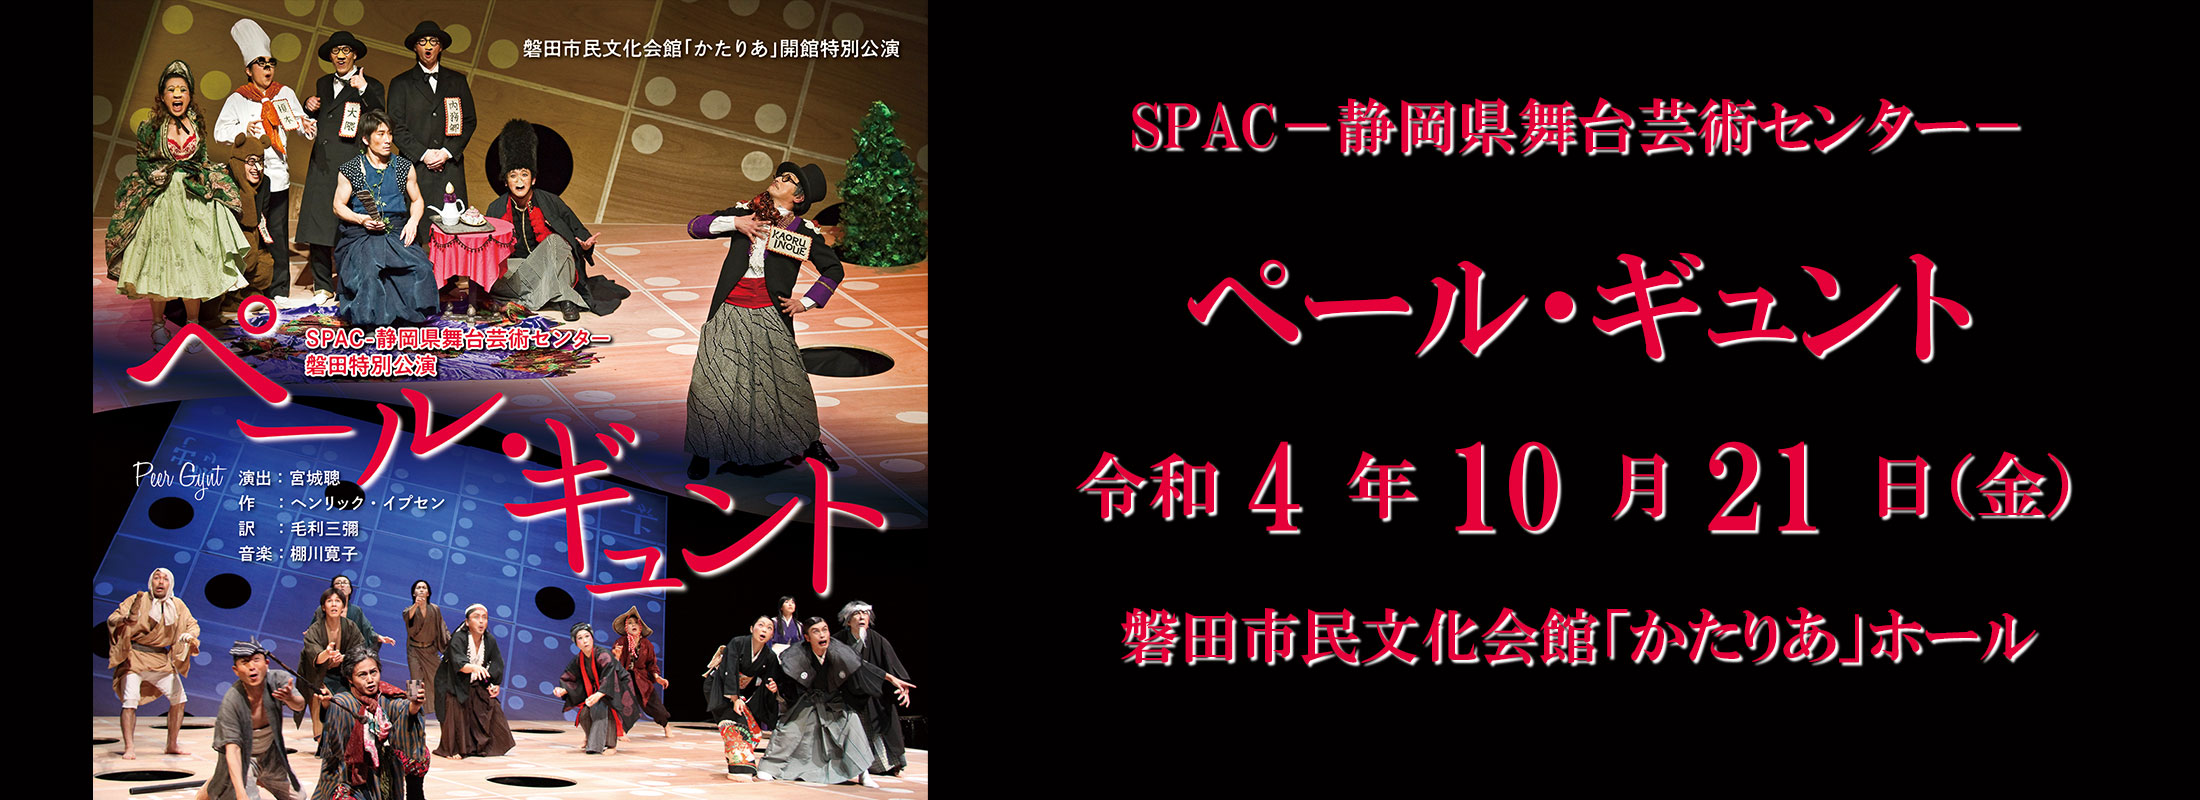 SPAC－静岡県舞台芸術センター－「ペール・ギュント」